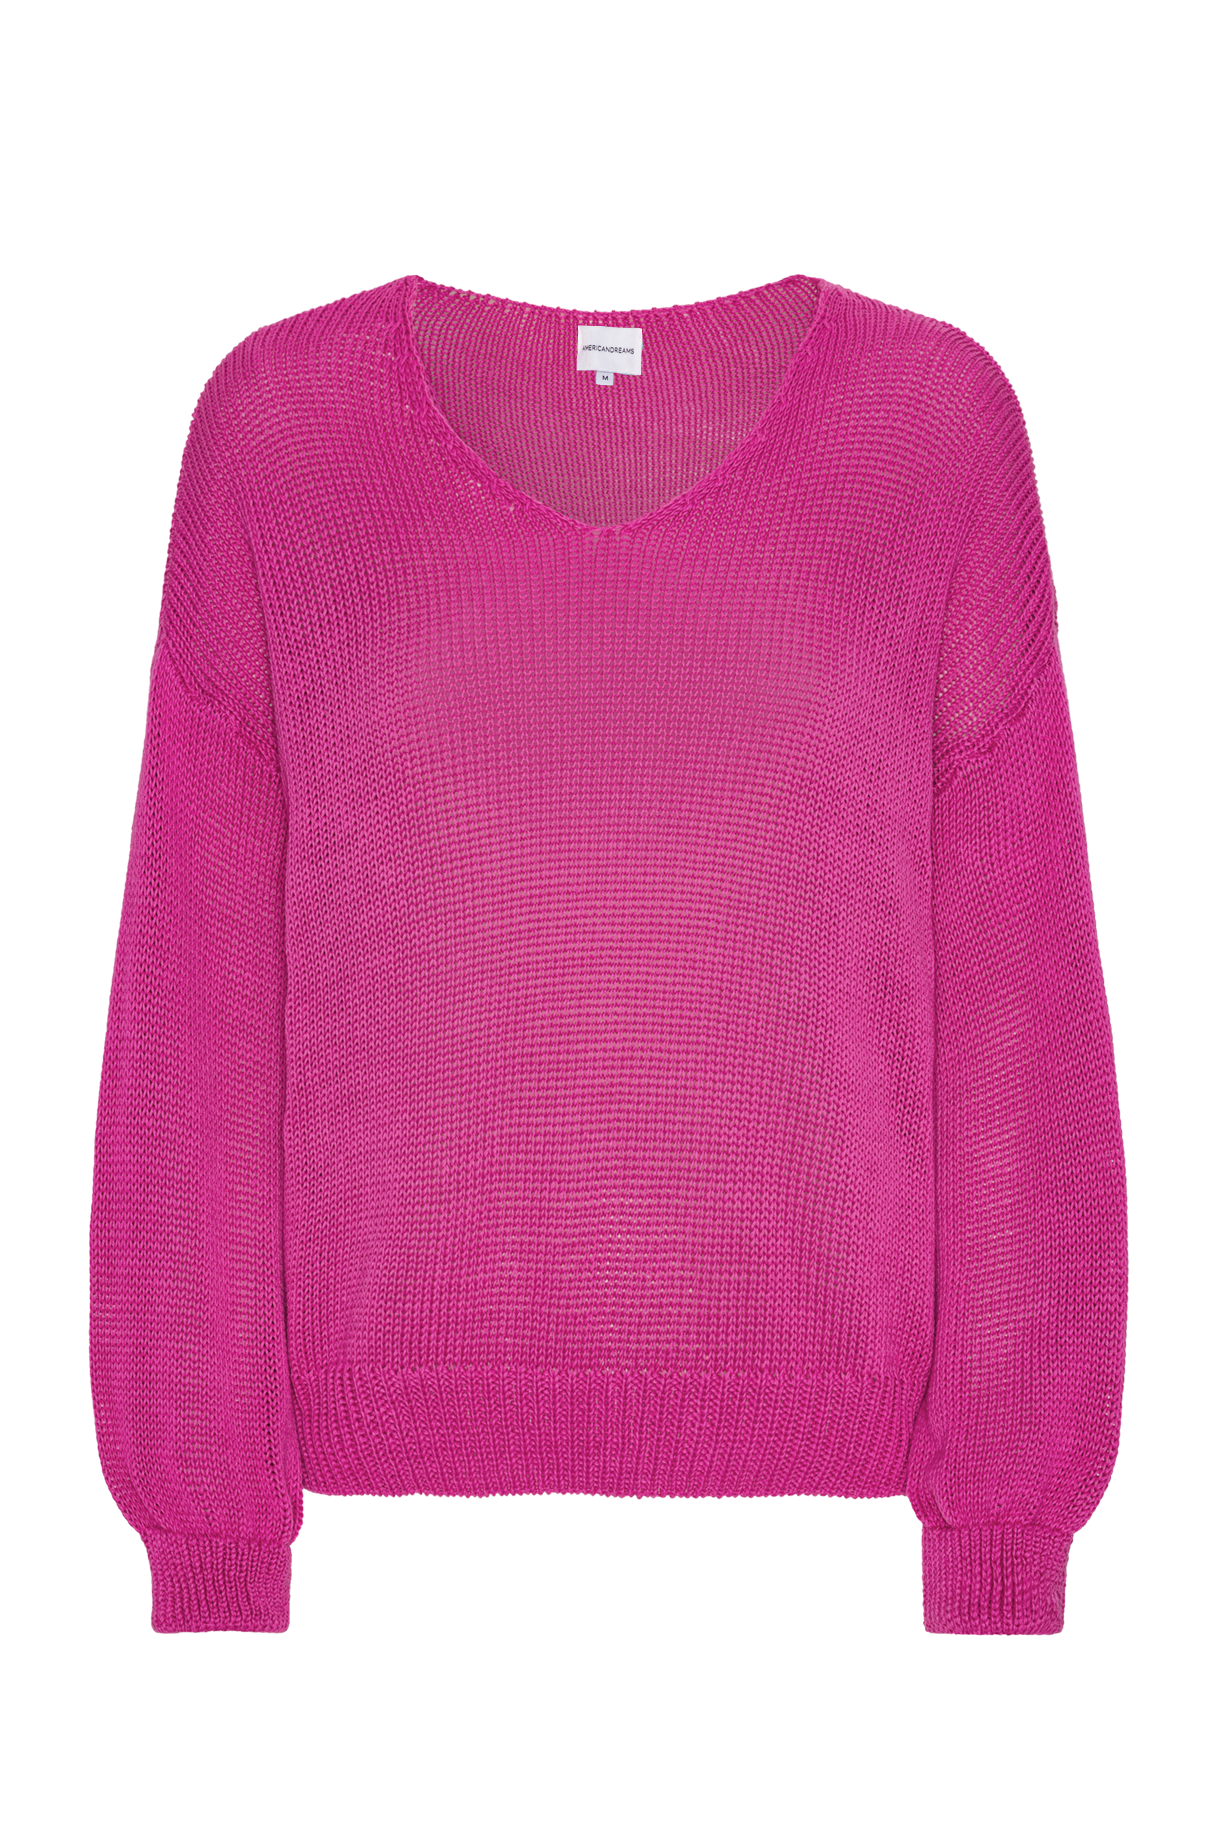 Milana LS Light Cotton Knit Neo Pink